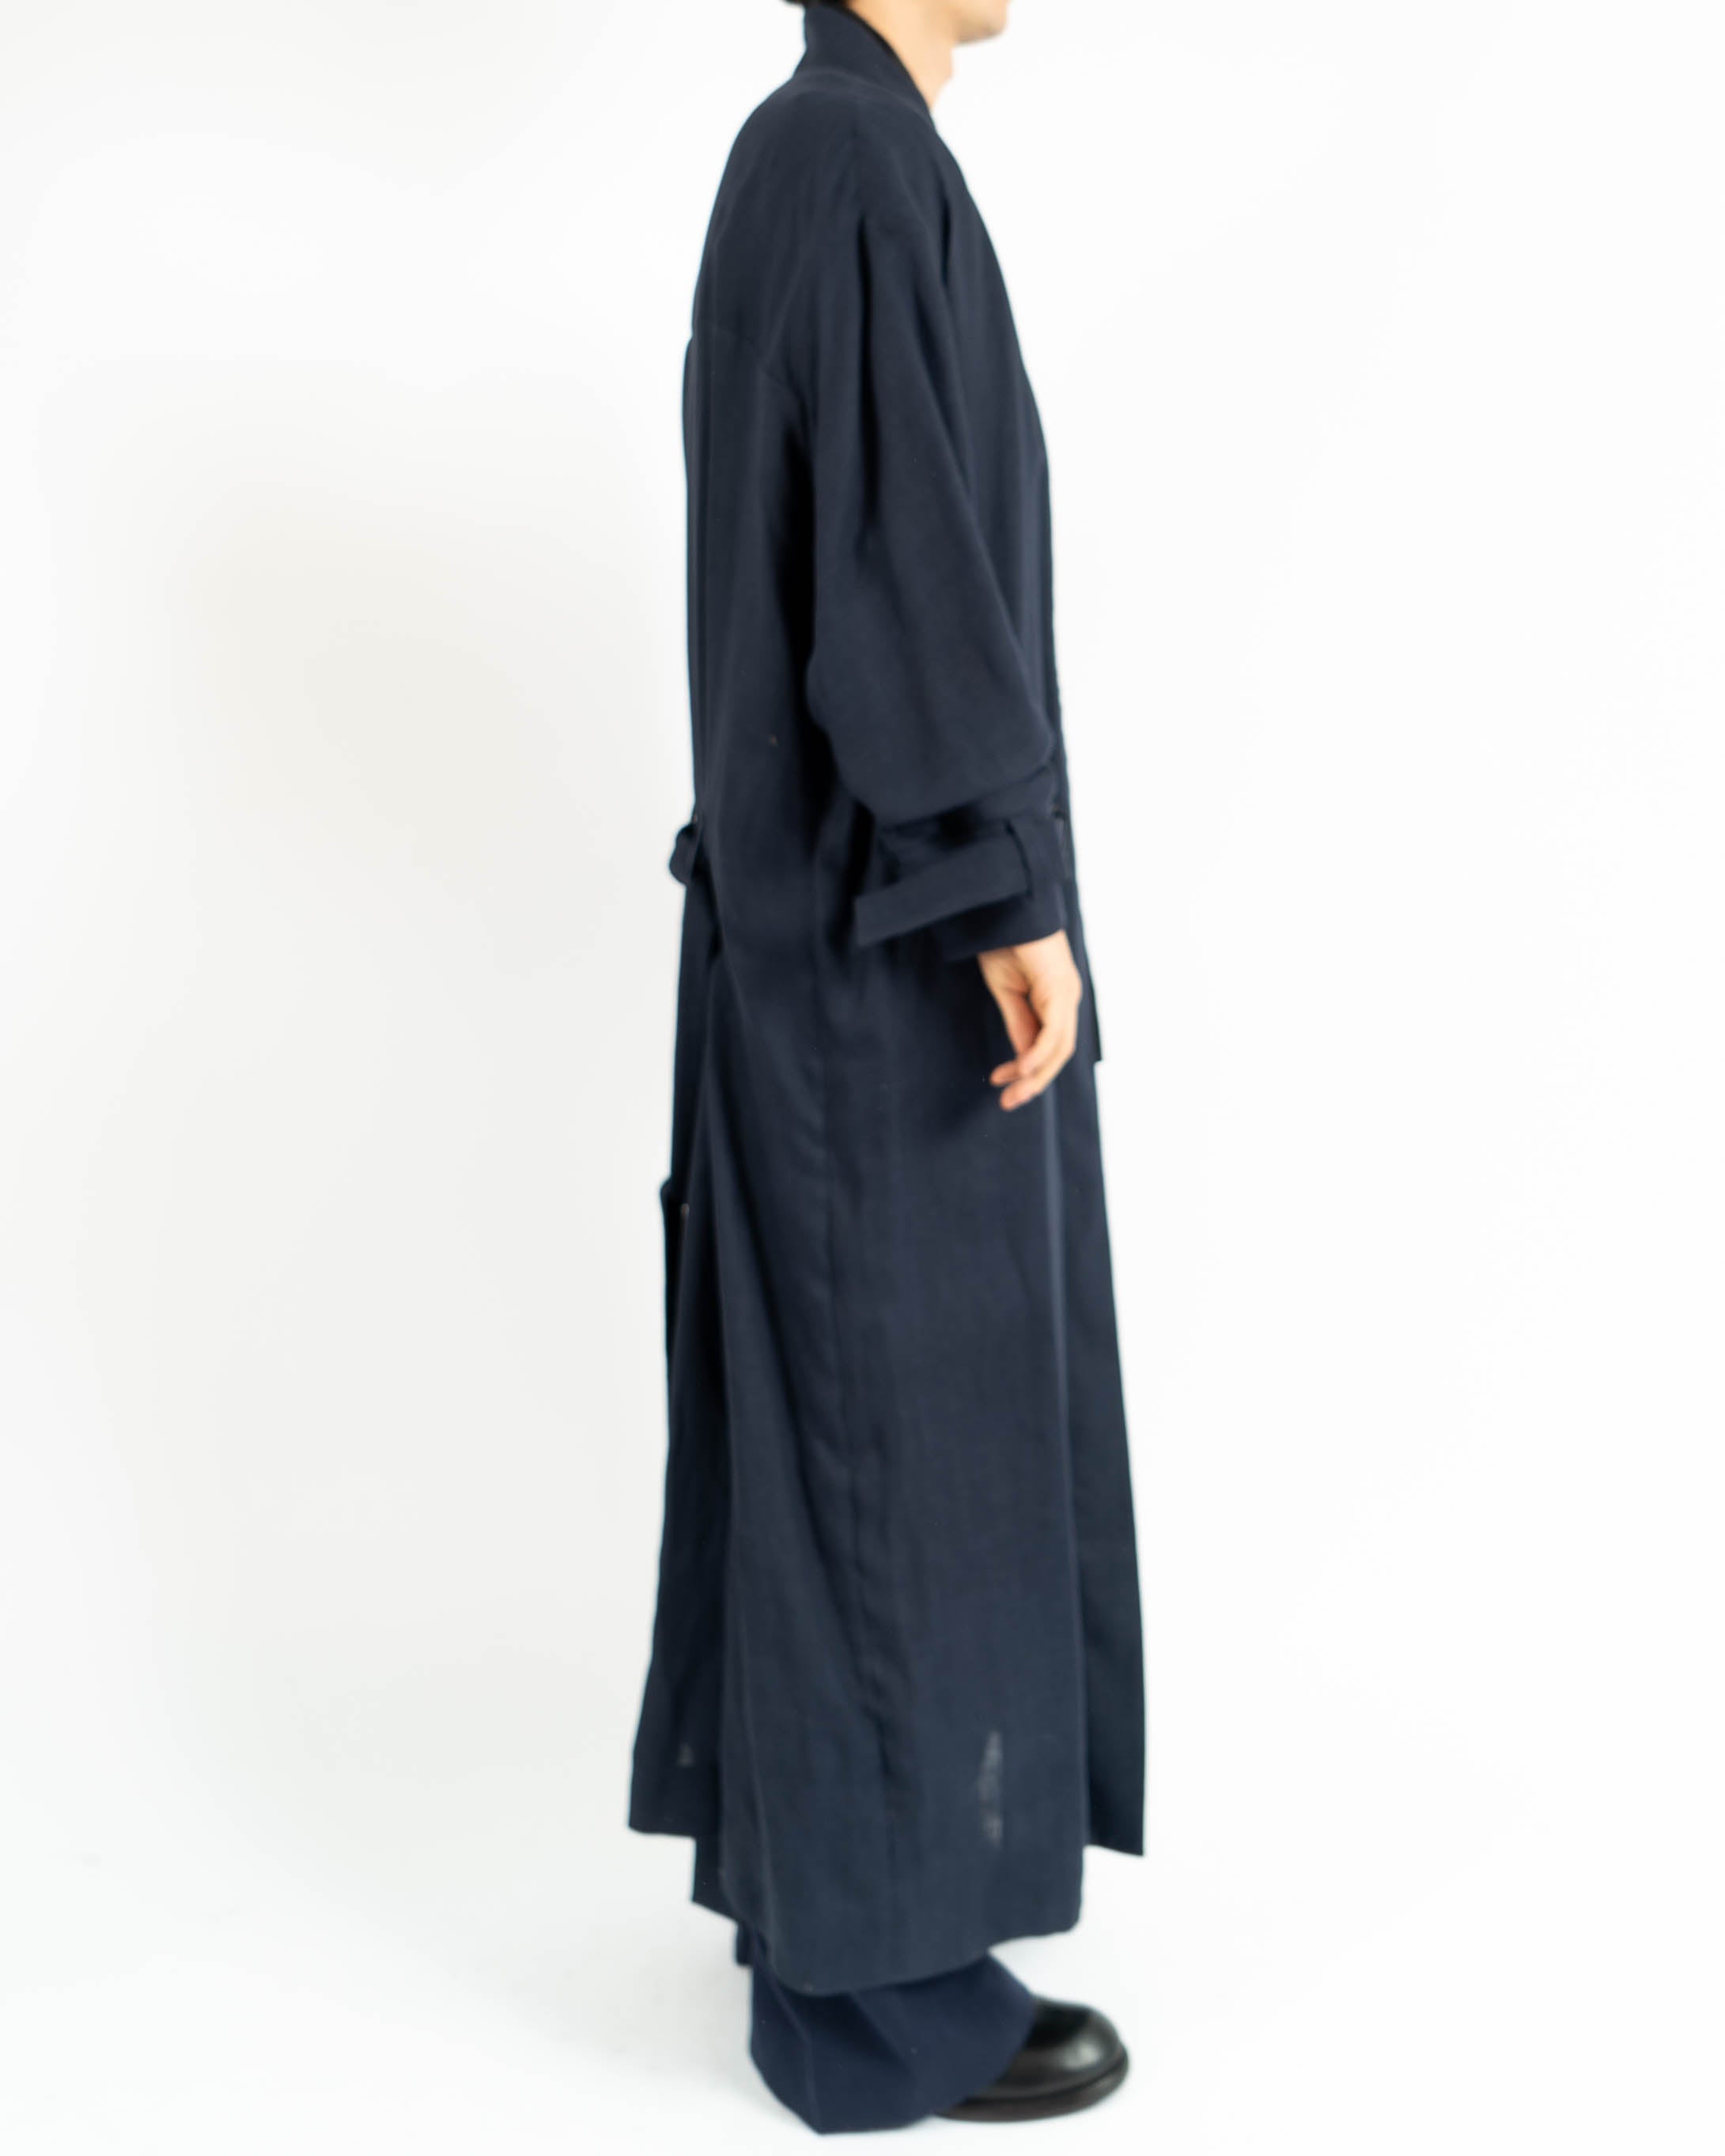 SS17 Dark Blue Belted Wool Coat